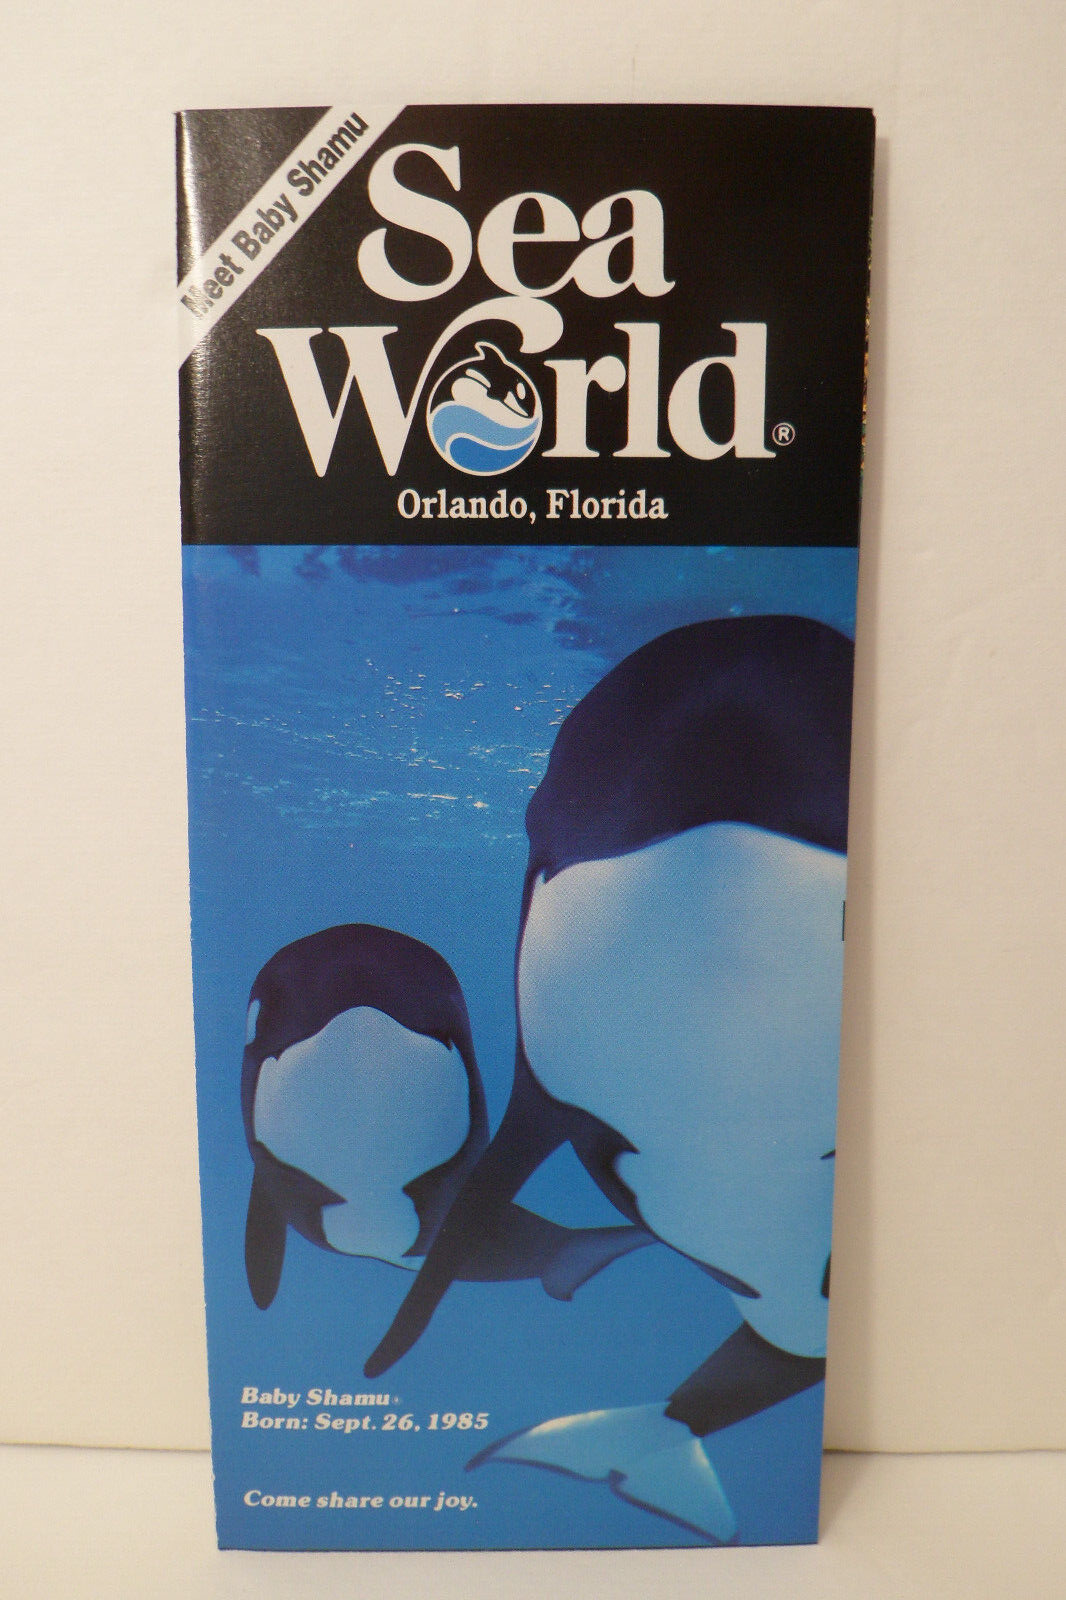 1985 Sea World Orlando Florida Meet Baby Shamu Born Sept. 1985 Vintage Brochure